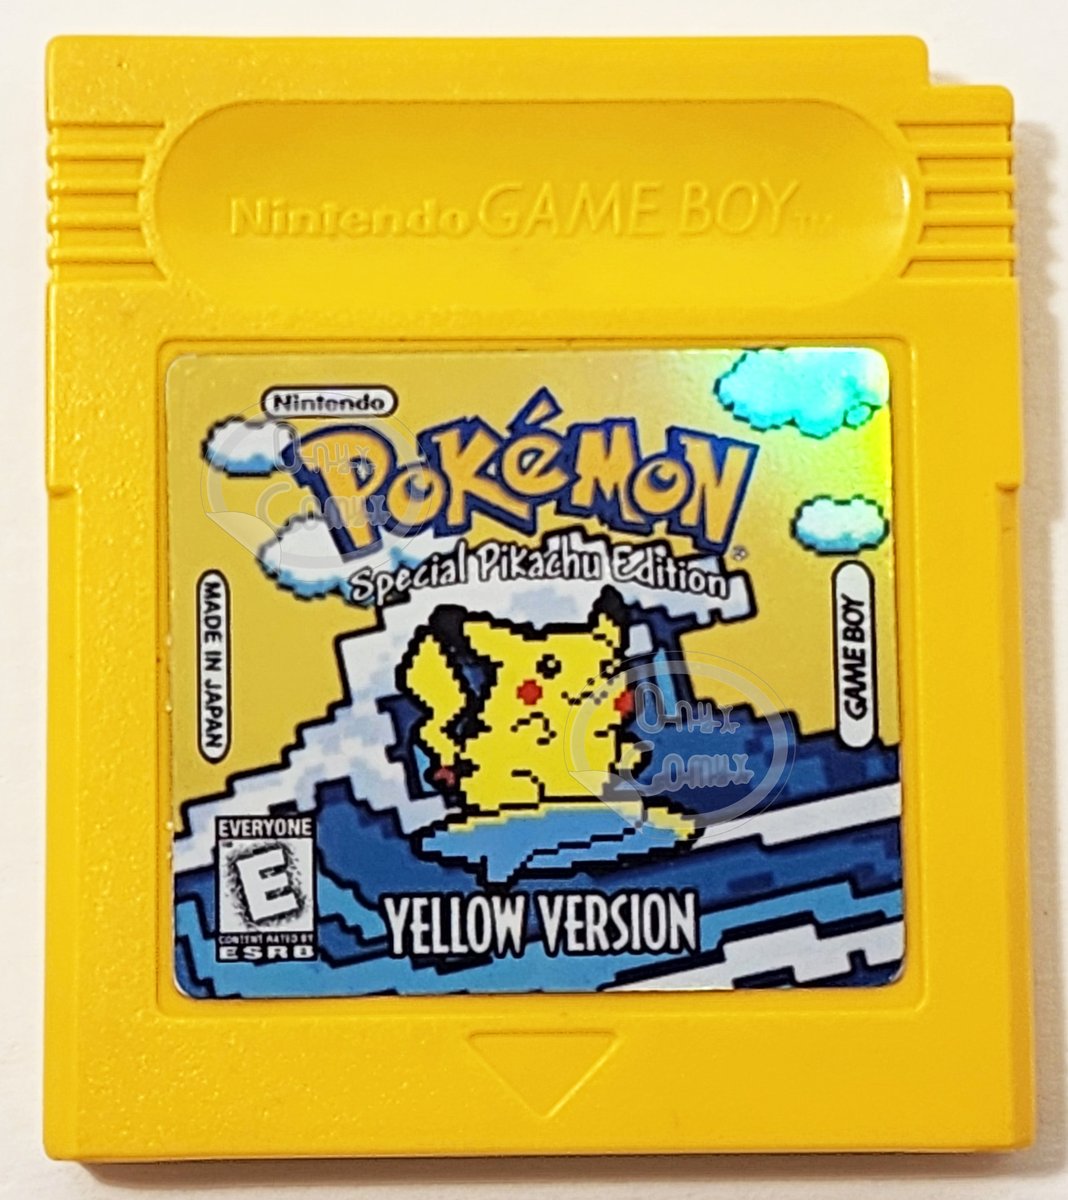 pokemon yellow cartridge sticker